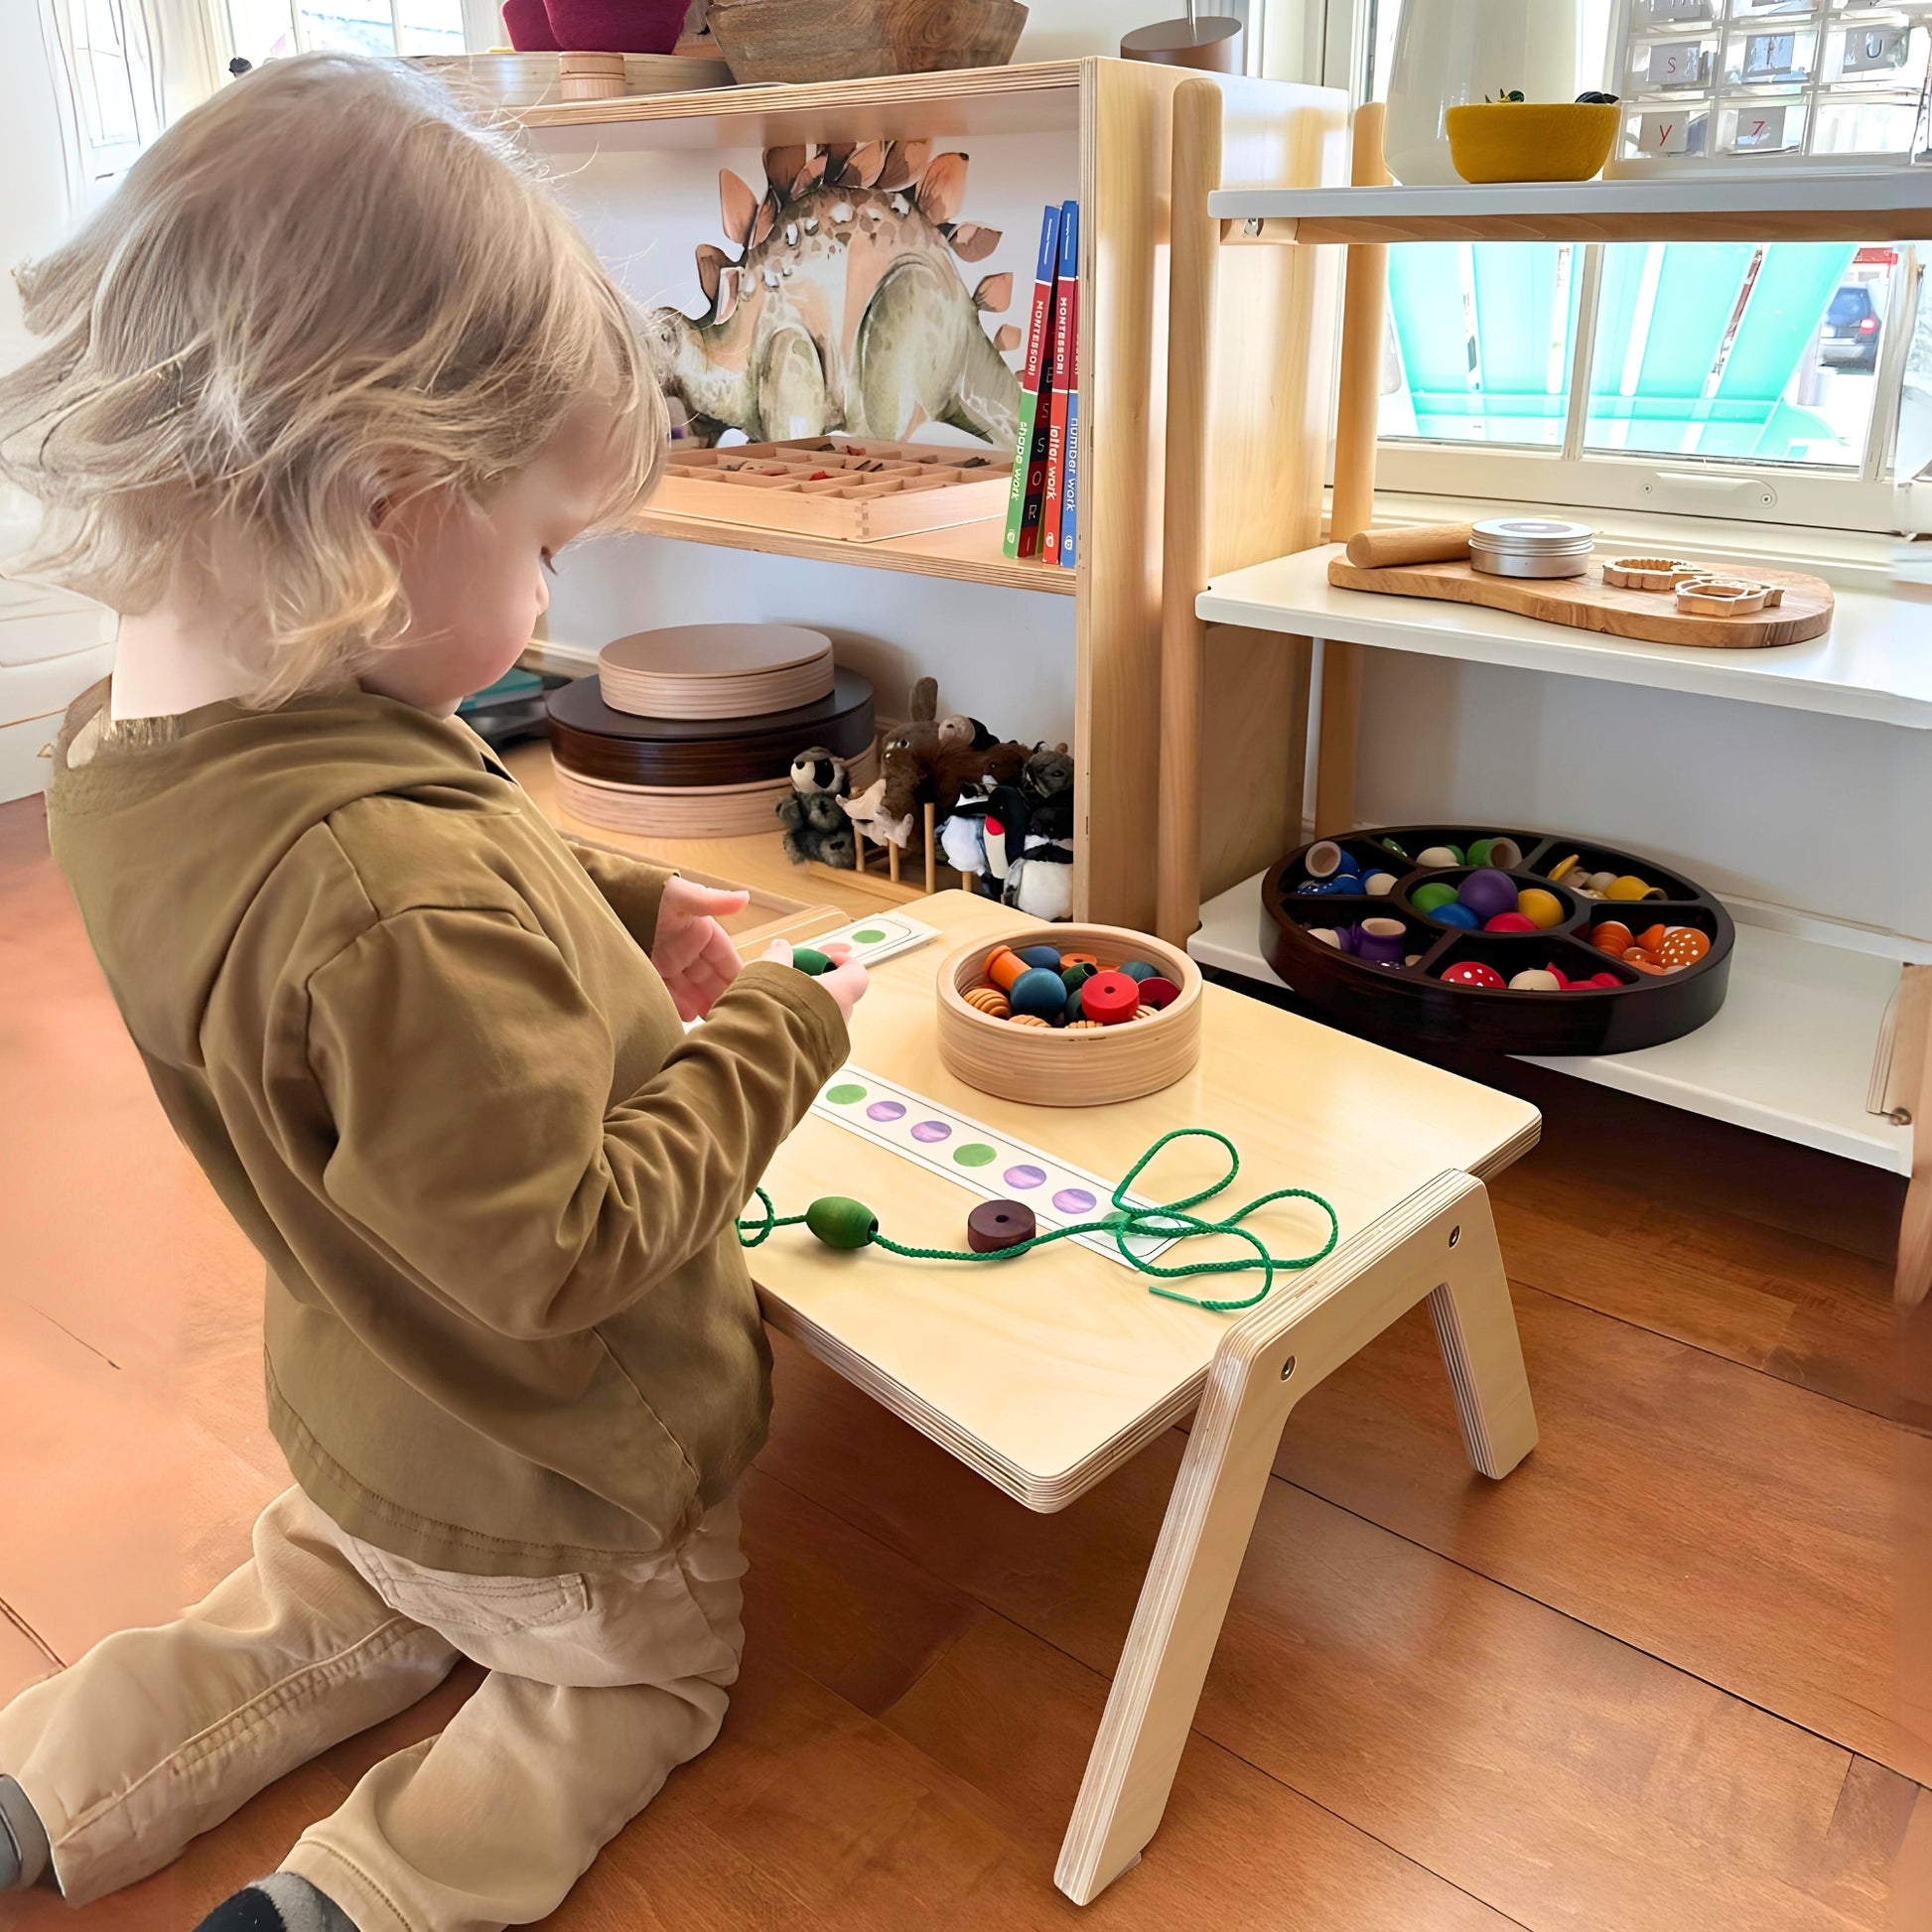 chowki table as a montessori workspace for montessori preschools and homeschool